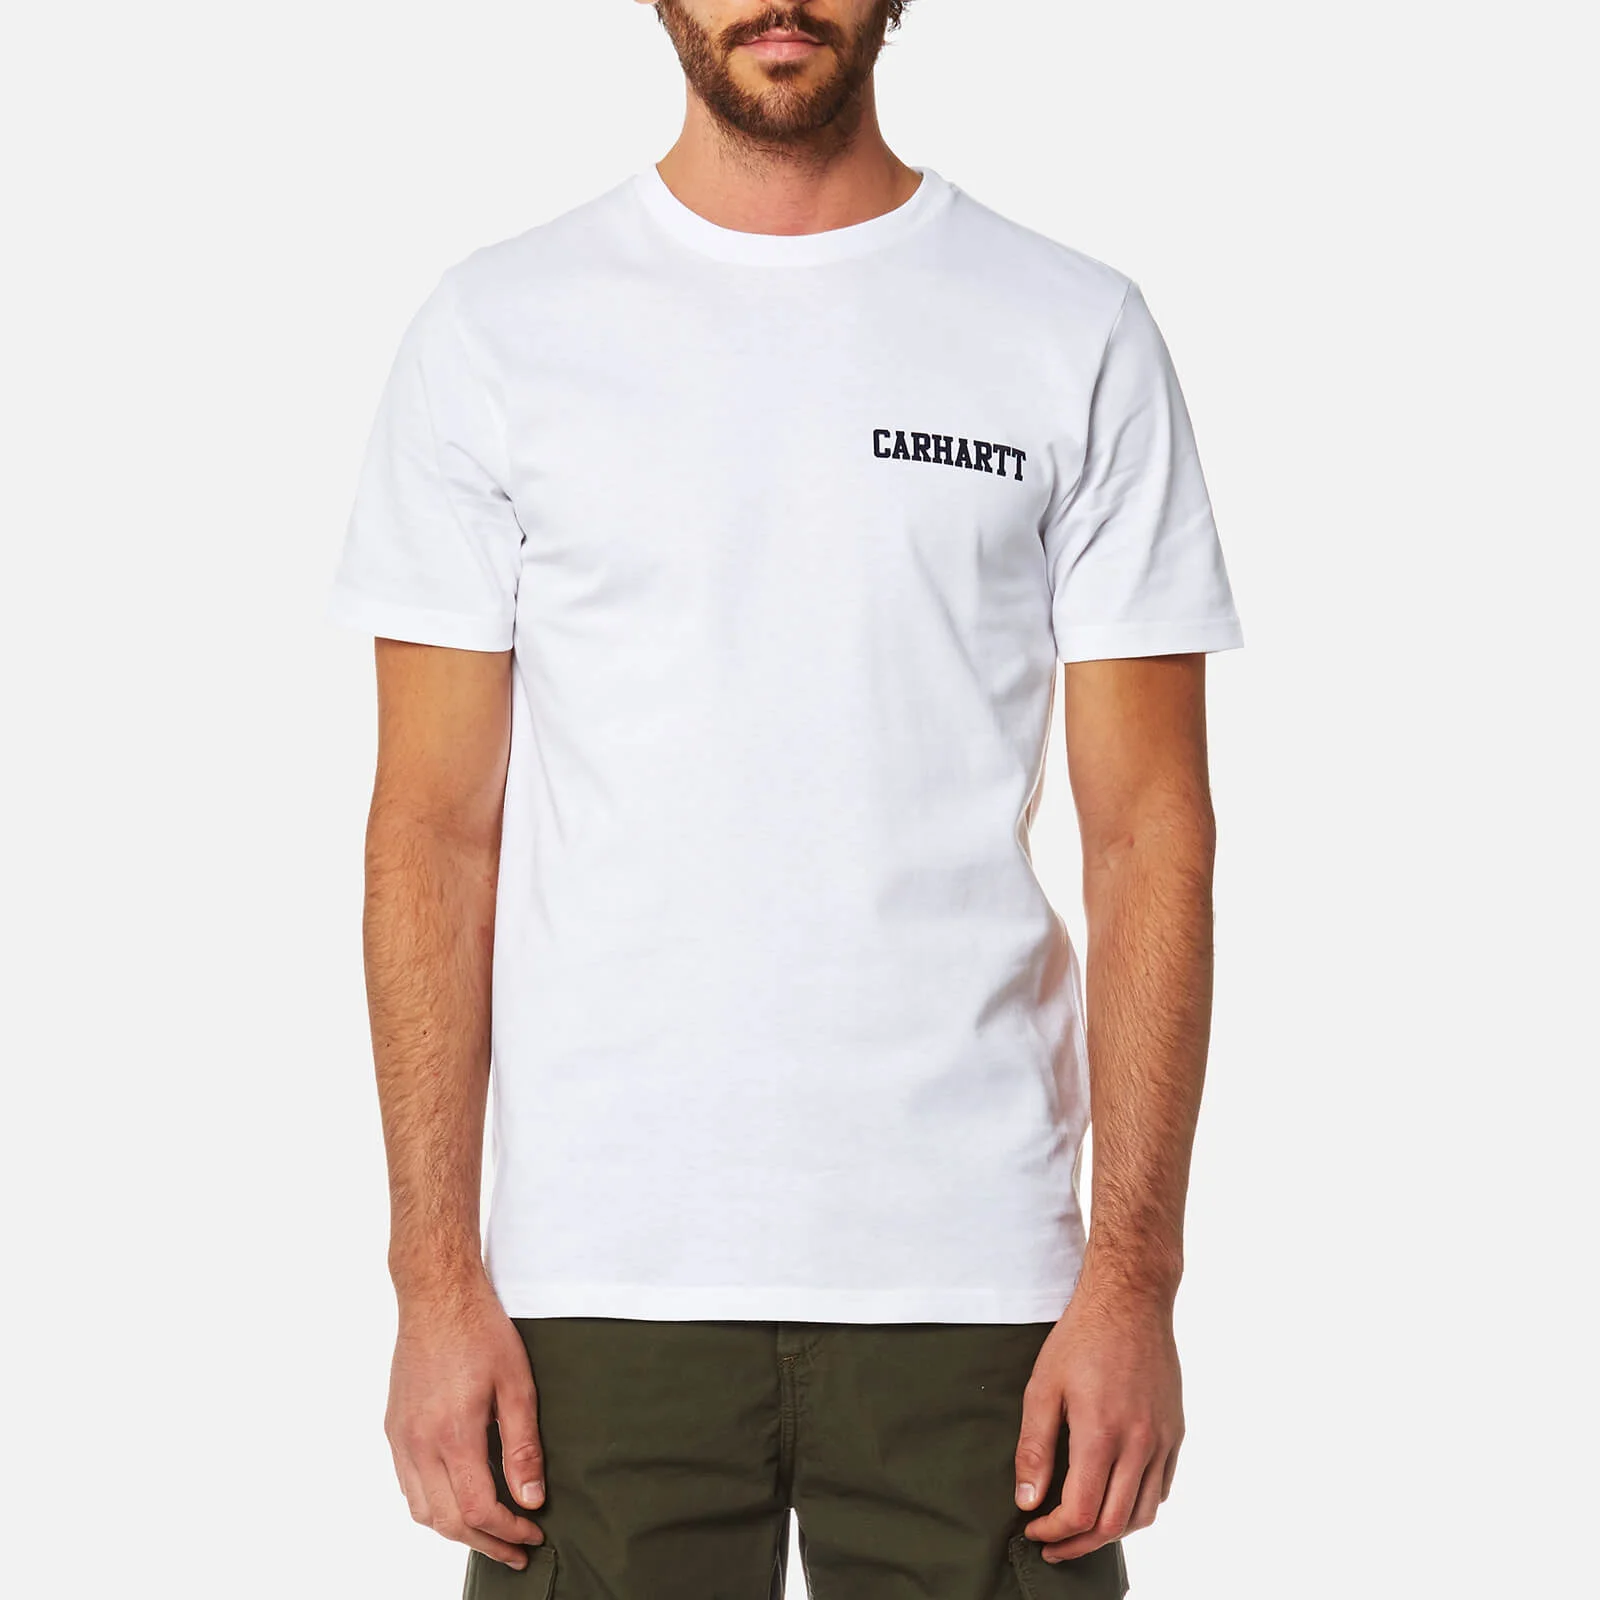 Carhartt Men's College Script T-Shirt - White/Navy Image 1